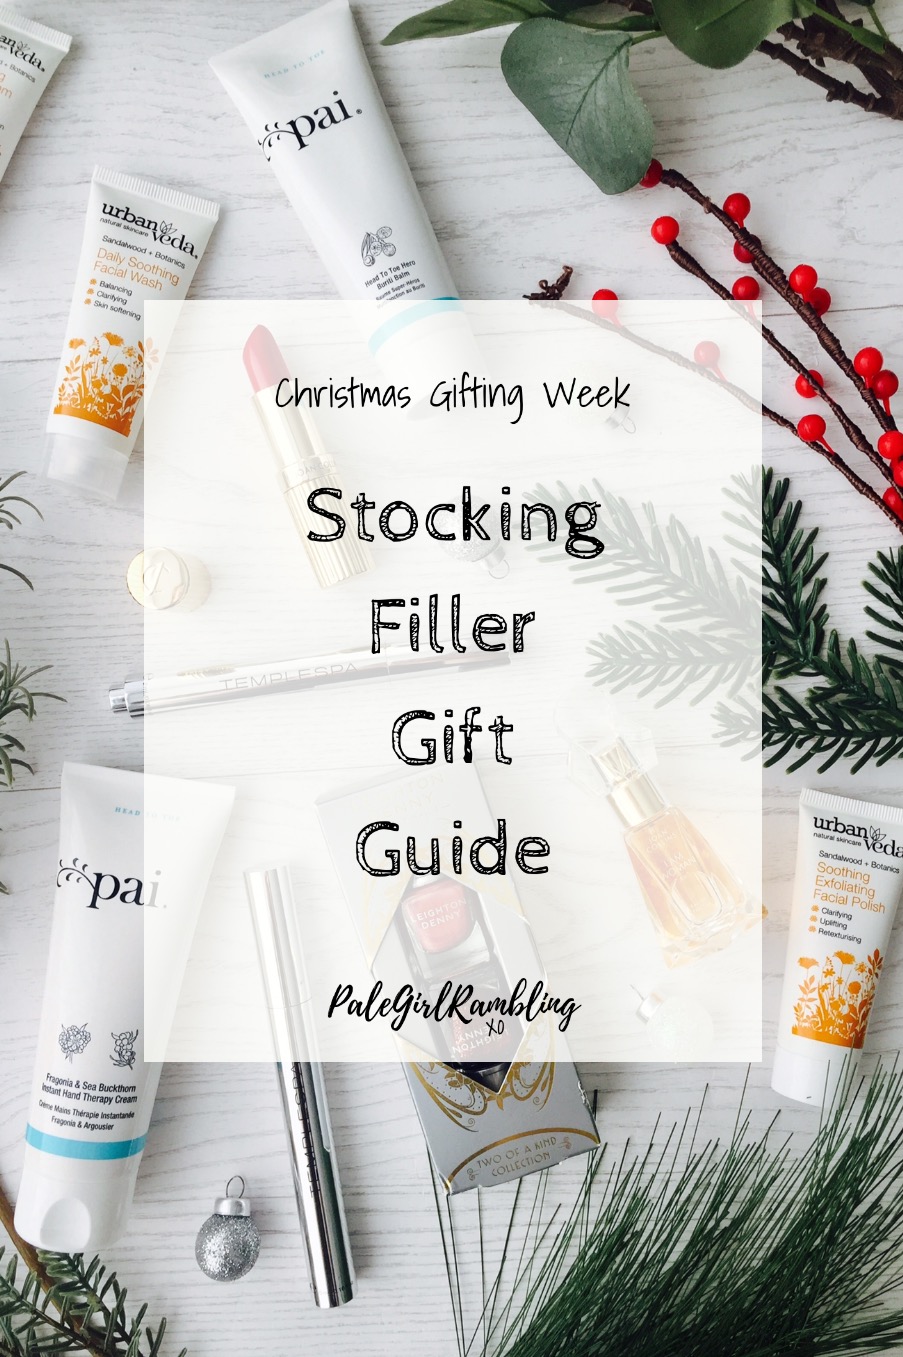 Stocking filler gift guide ideas